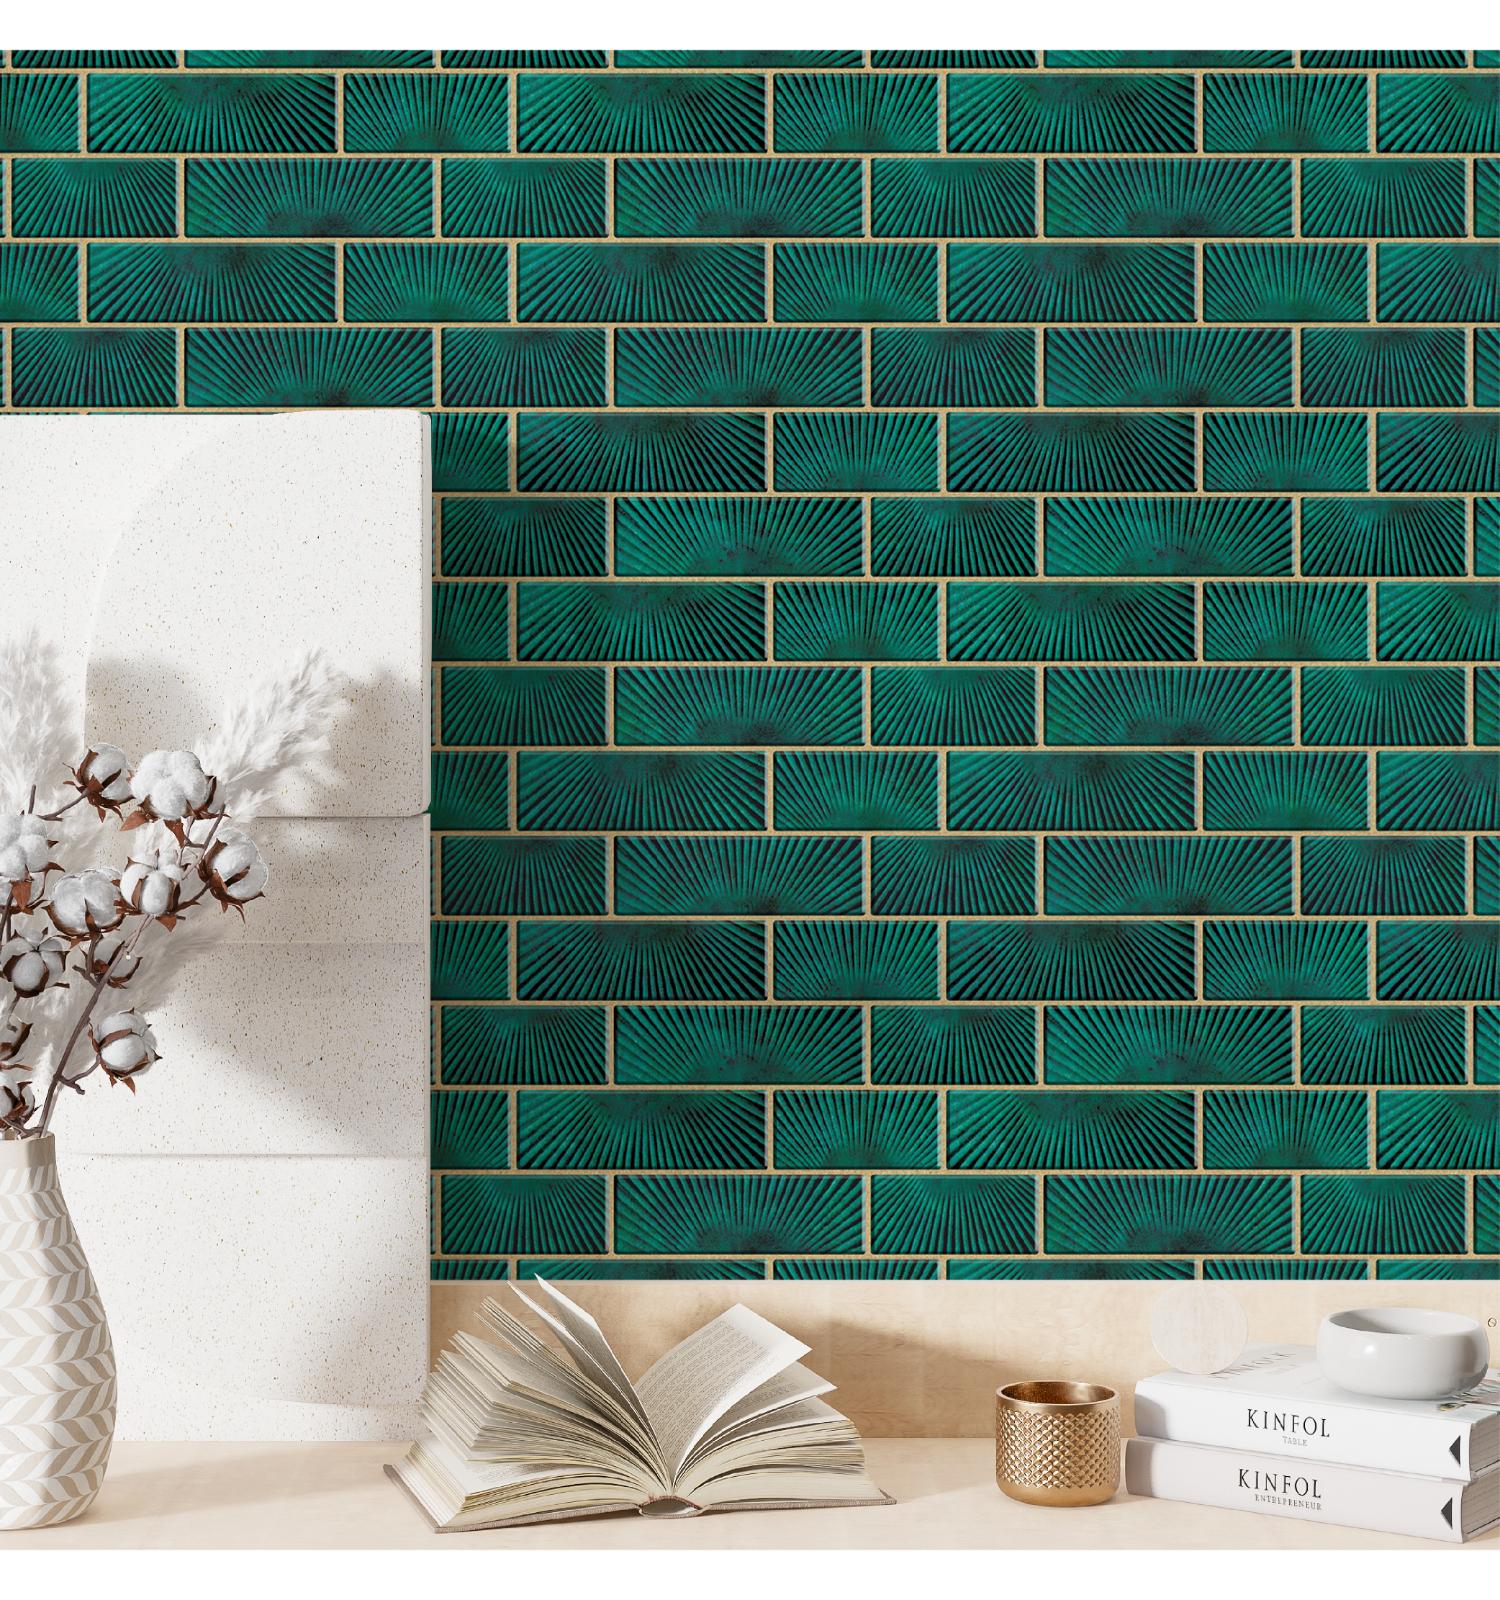 Teal Subway Peel and Stick Wall Tile | Kitchen Backsplash Tiles | Self Adhesive Tiles For Home Decor